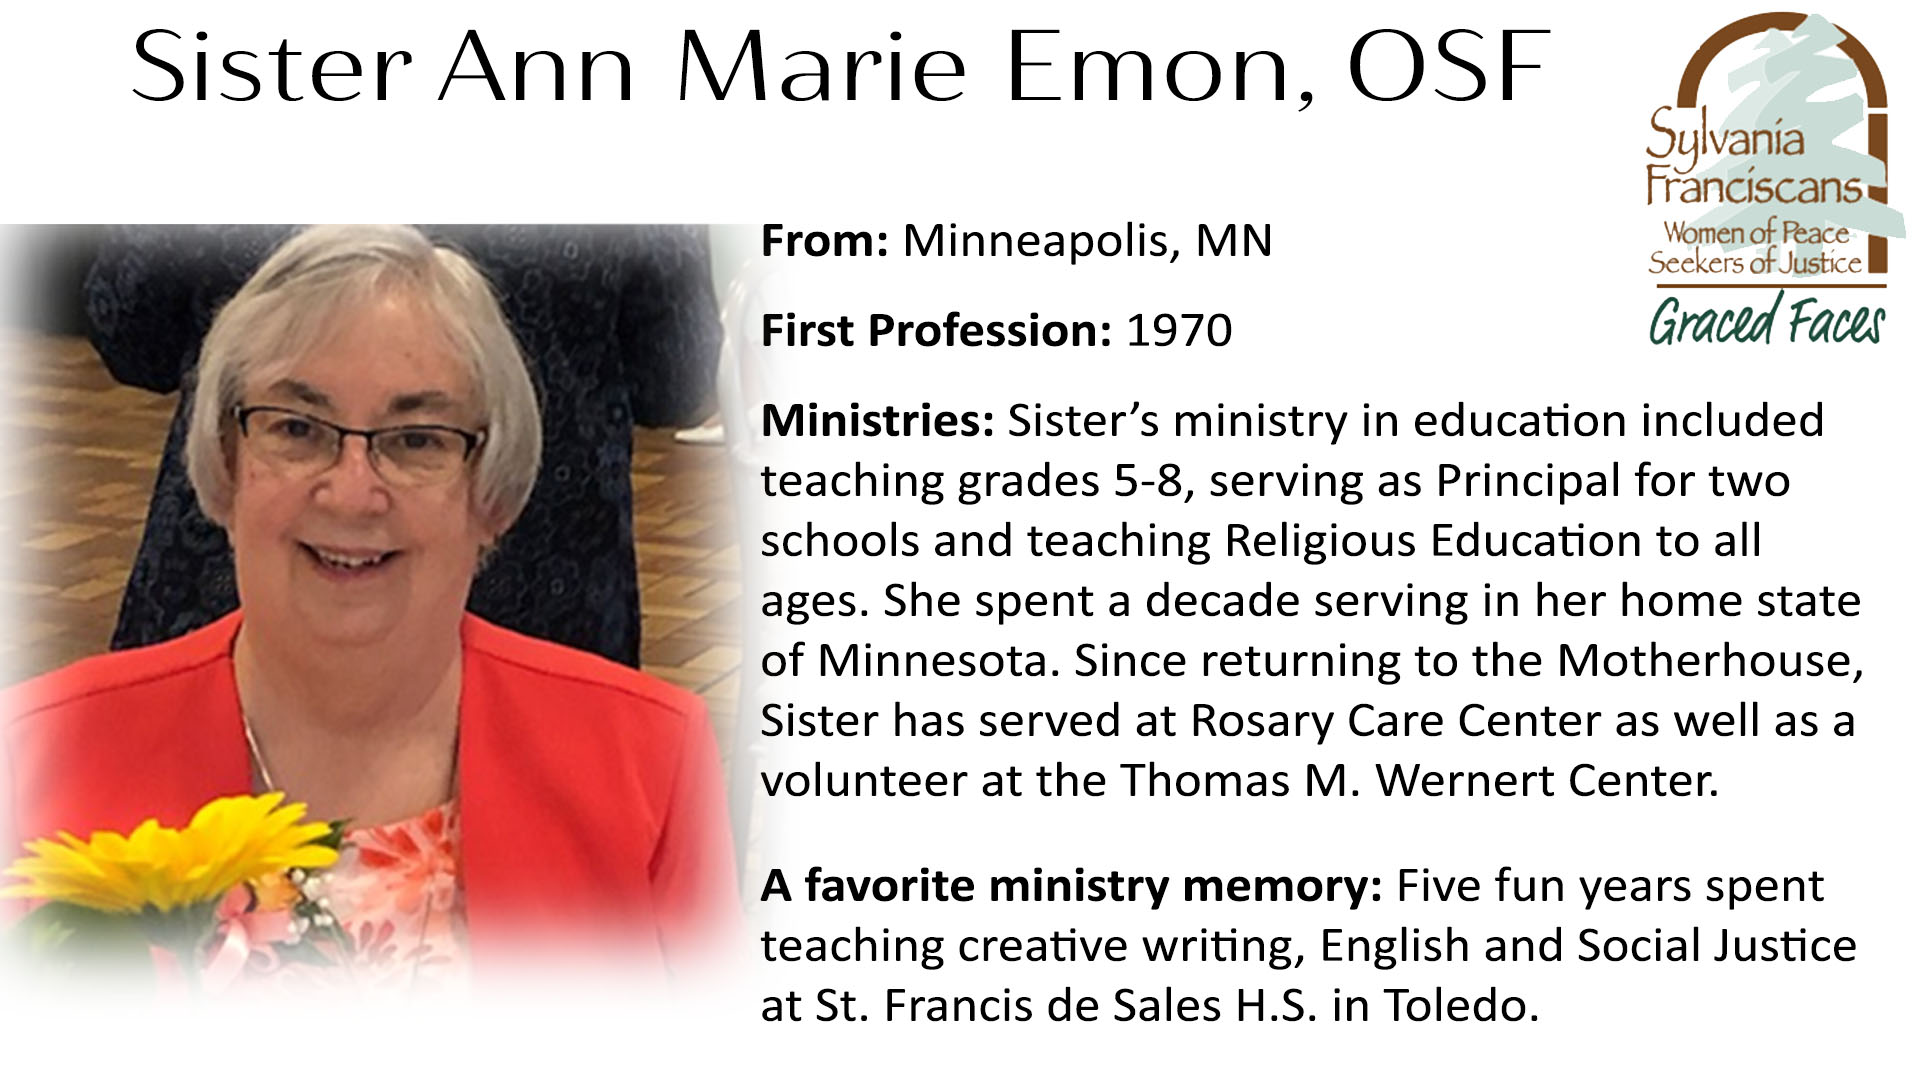 Sister Ann Marie Emon Graced Faces OSF 2